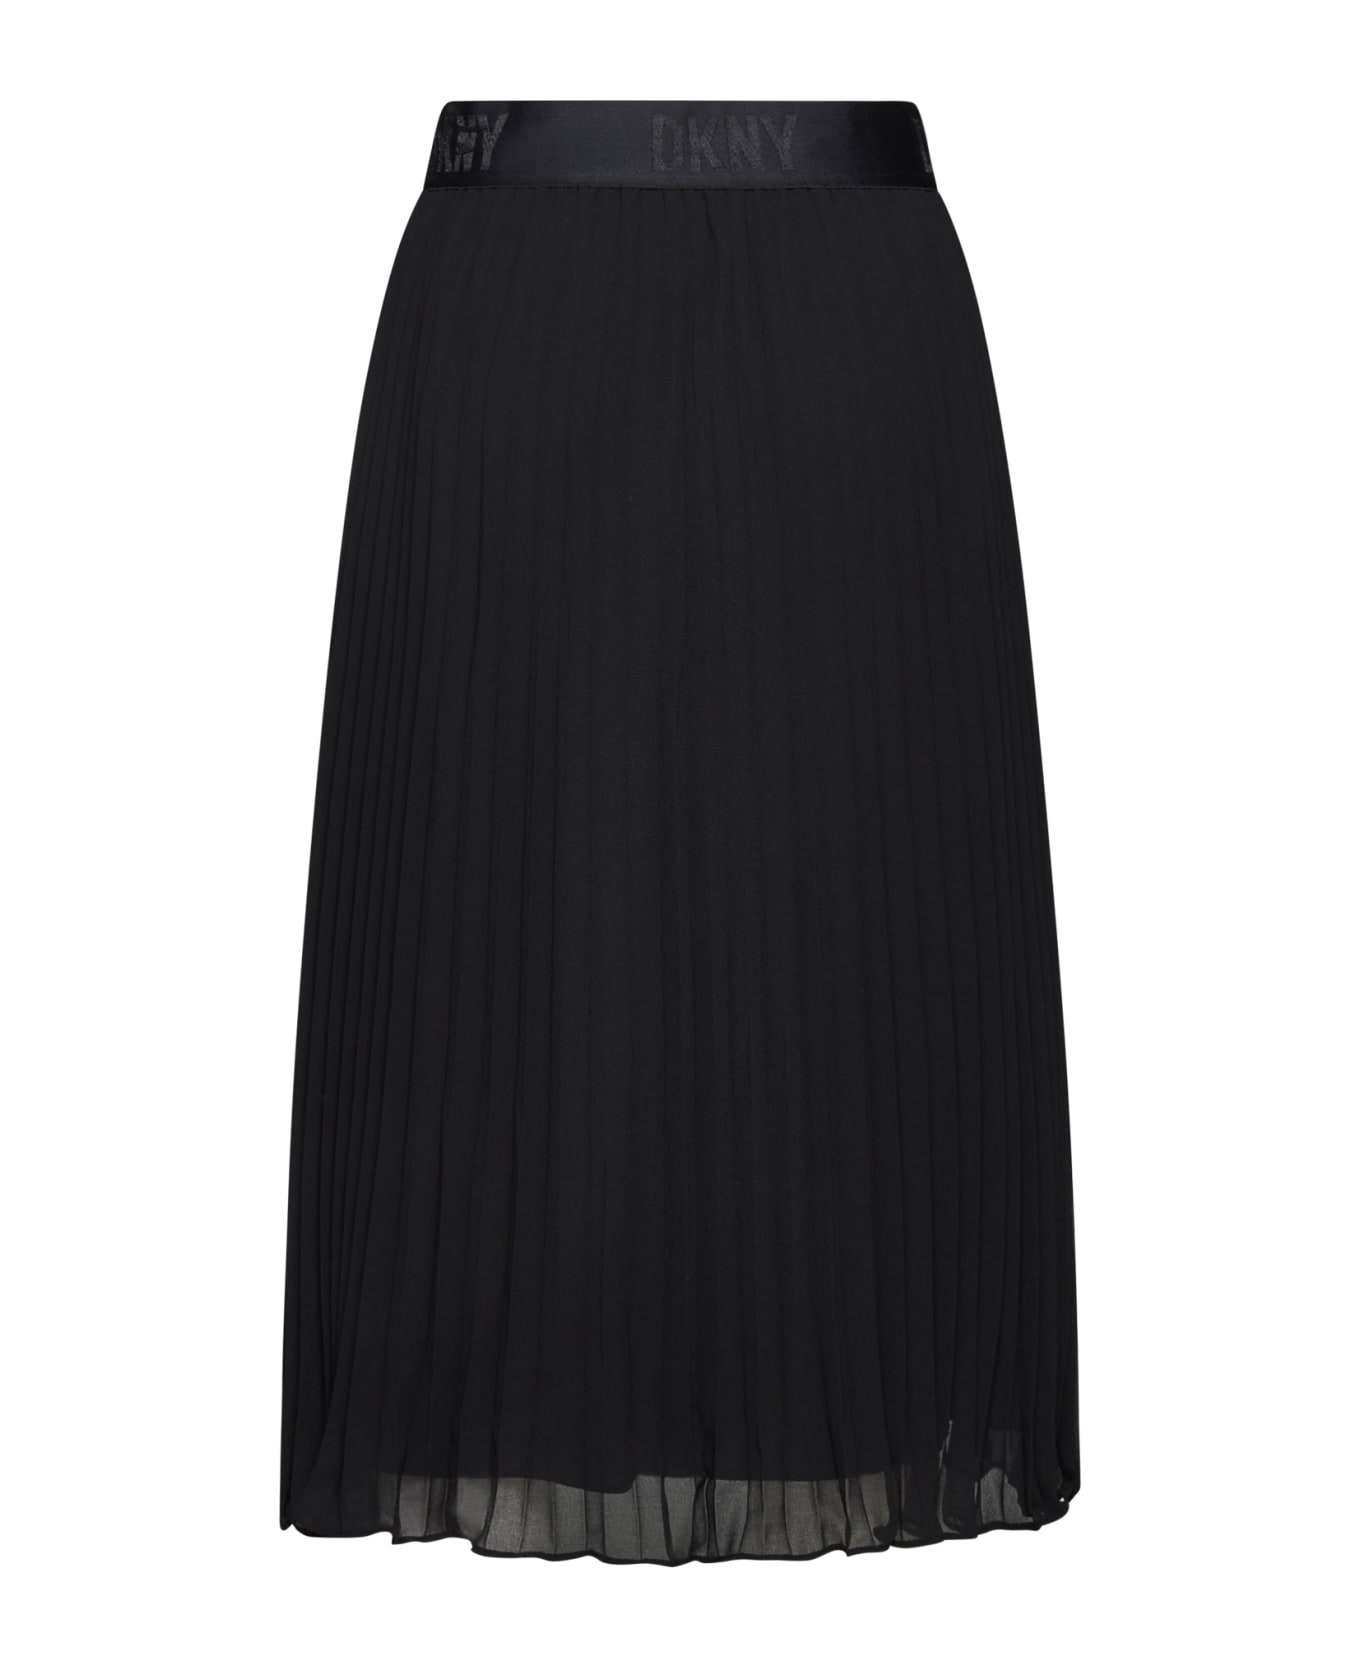 DKNY Skirt - Black